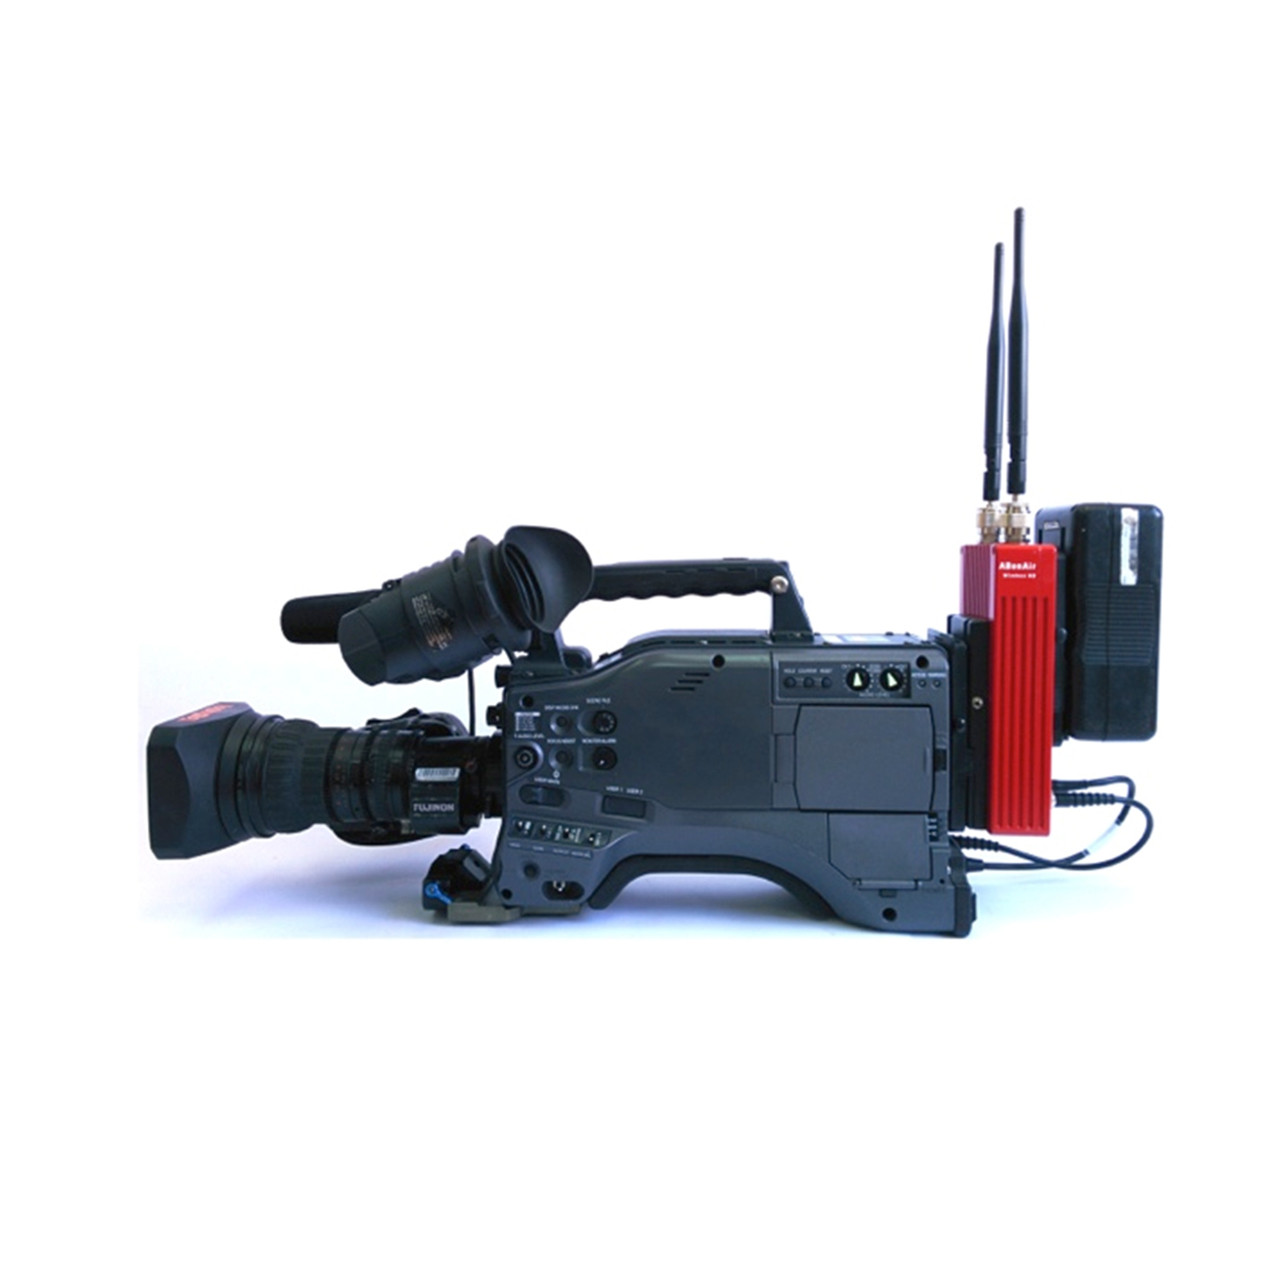 Craig BWA19AV905 Blackweb Dash Camera with Video Recorder